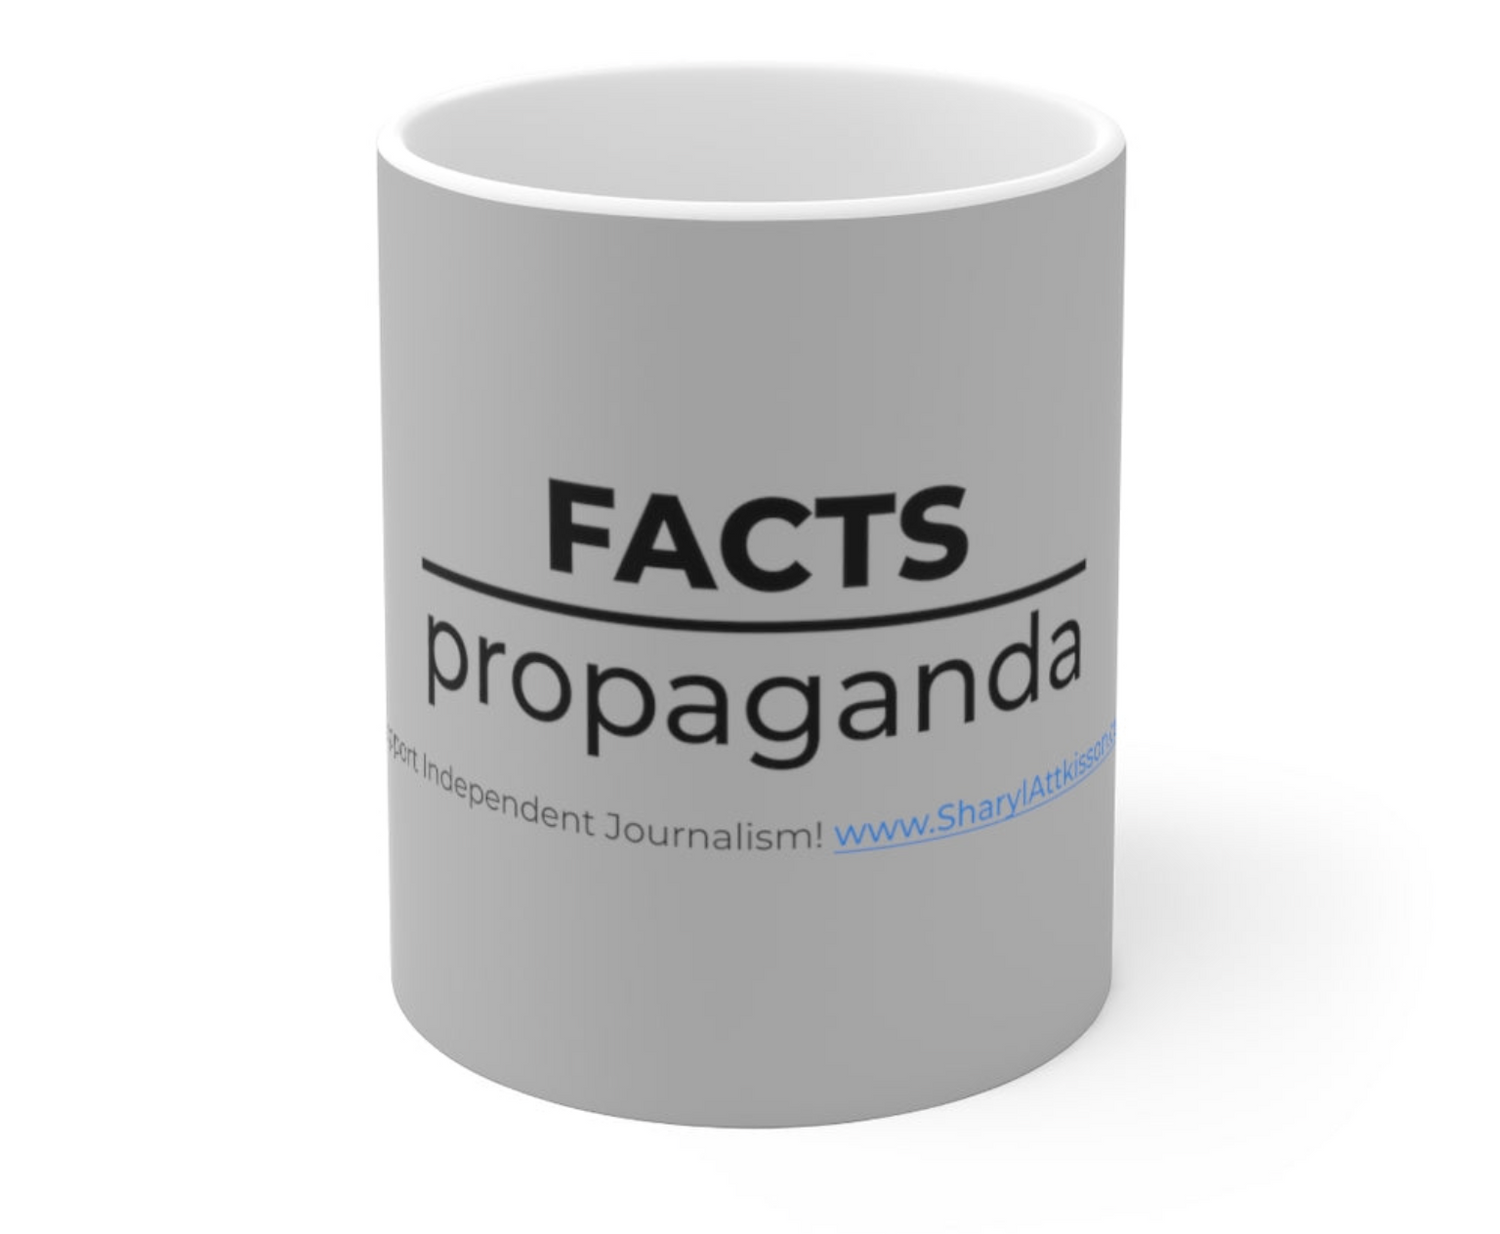 "Facts" over "Propaganda"